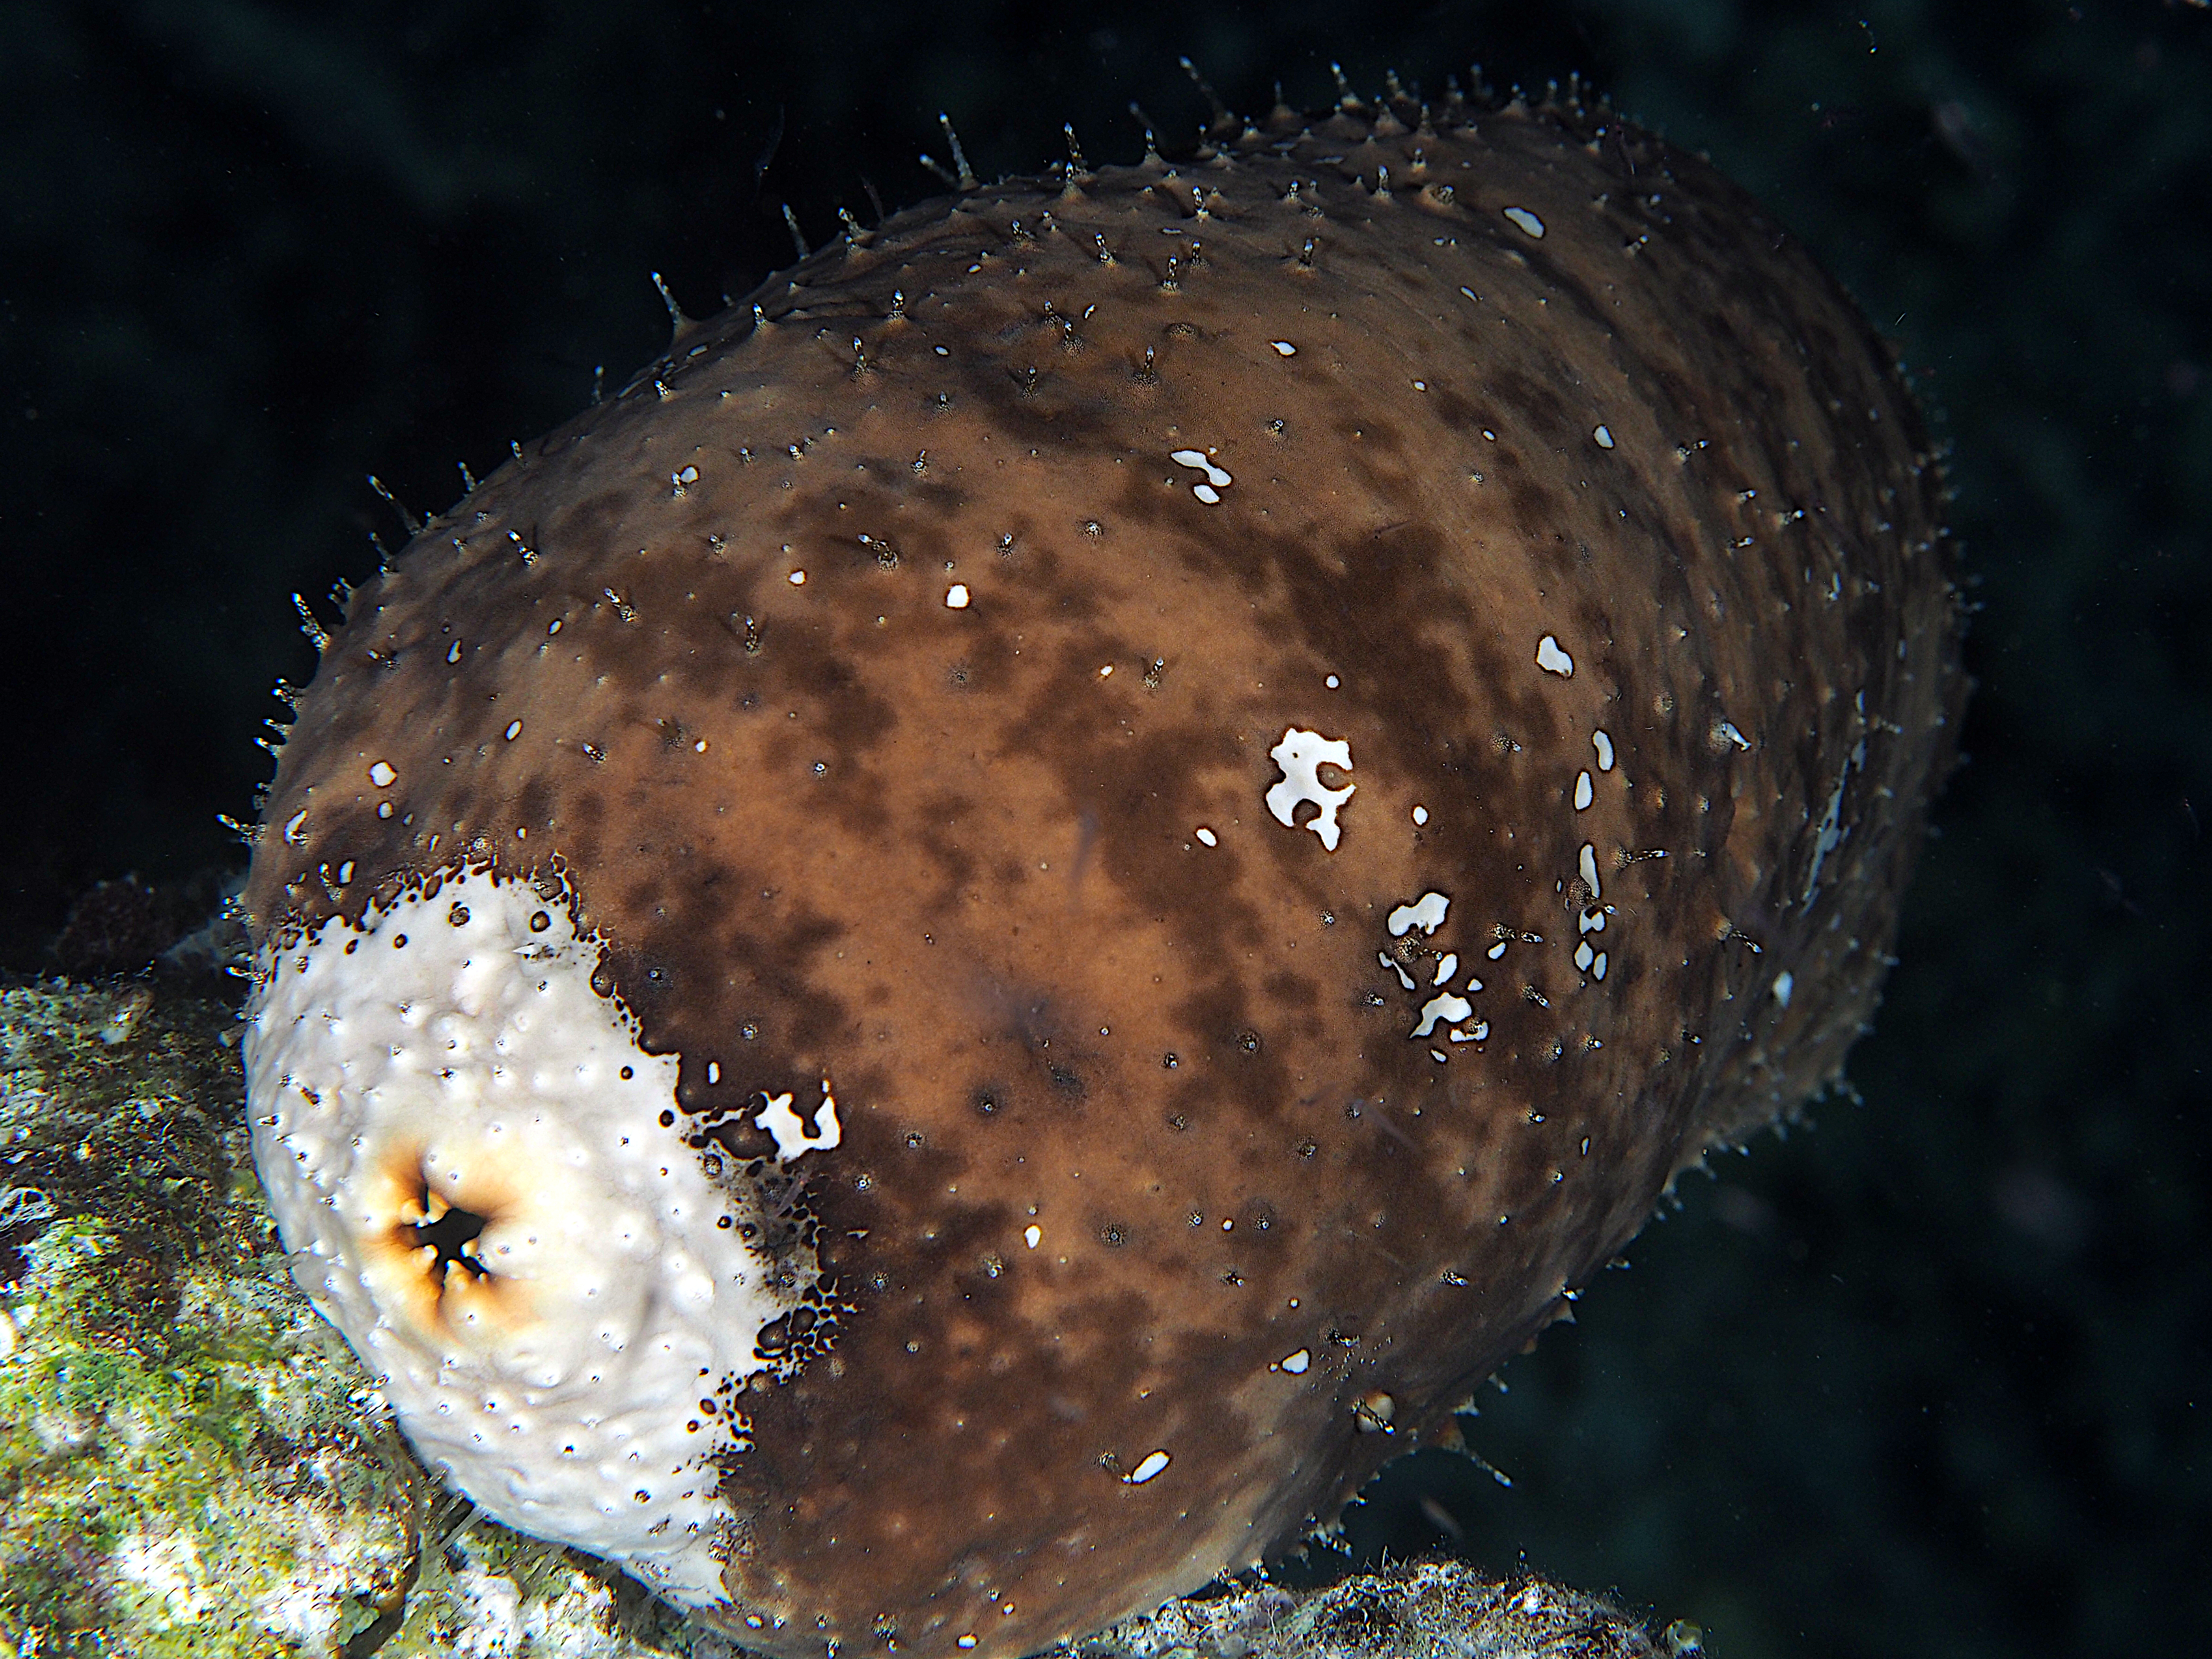 White-Rumped Sea Cucumber - Actinopyga lecanora